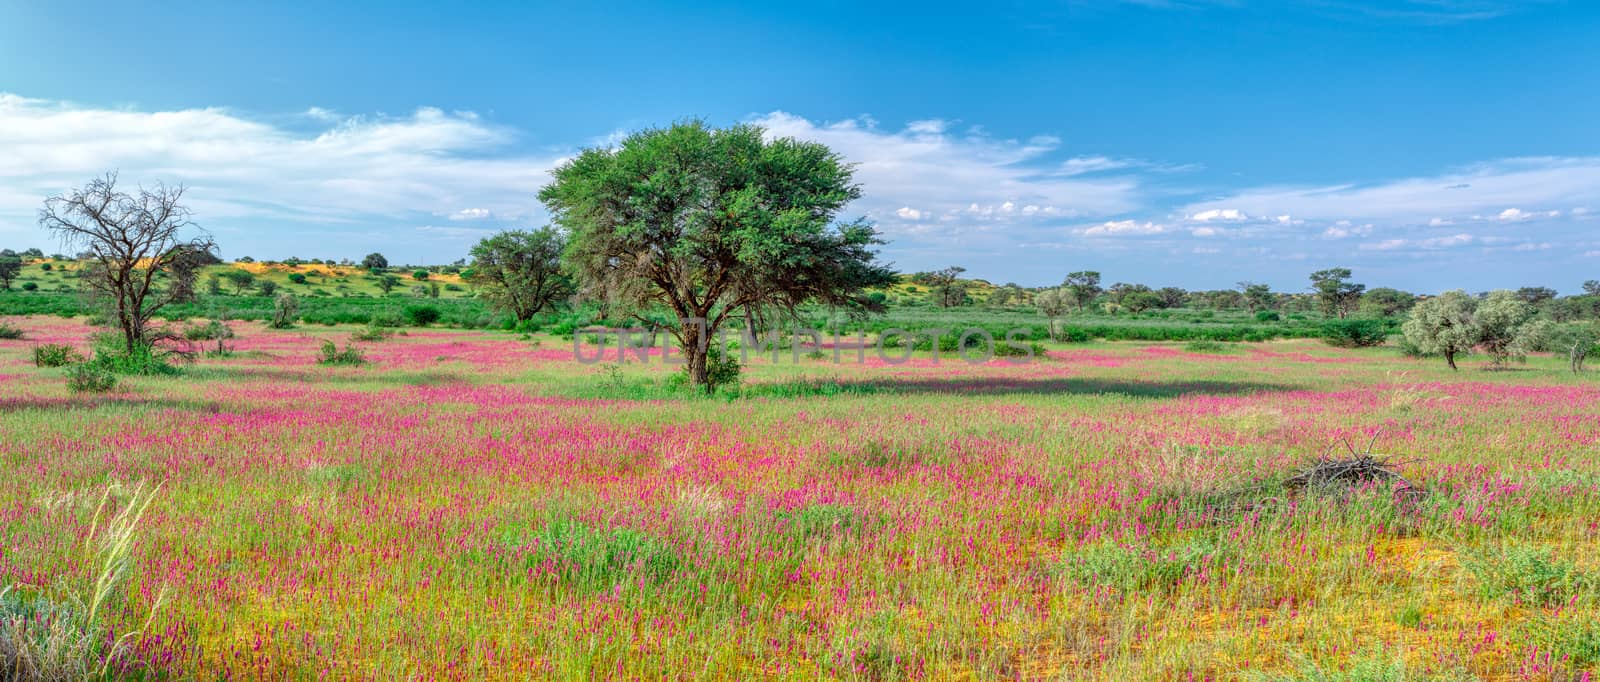 Flowering Kalahari desert South Africa wilderness by artush